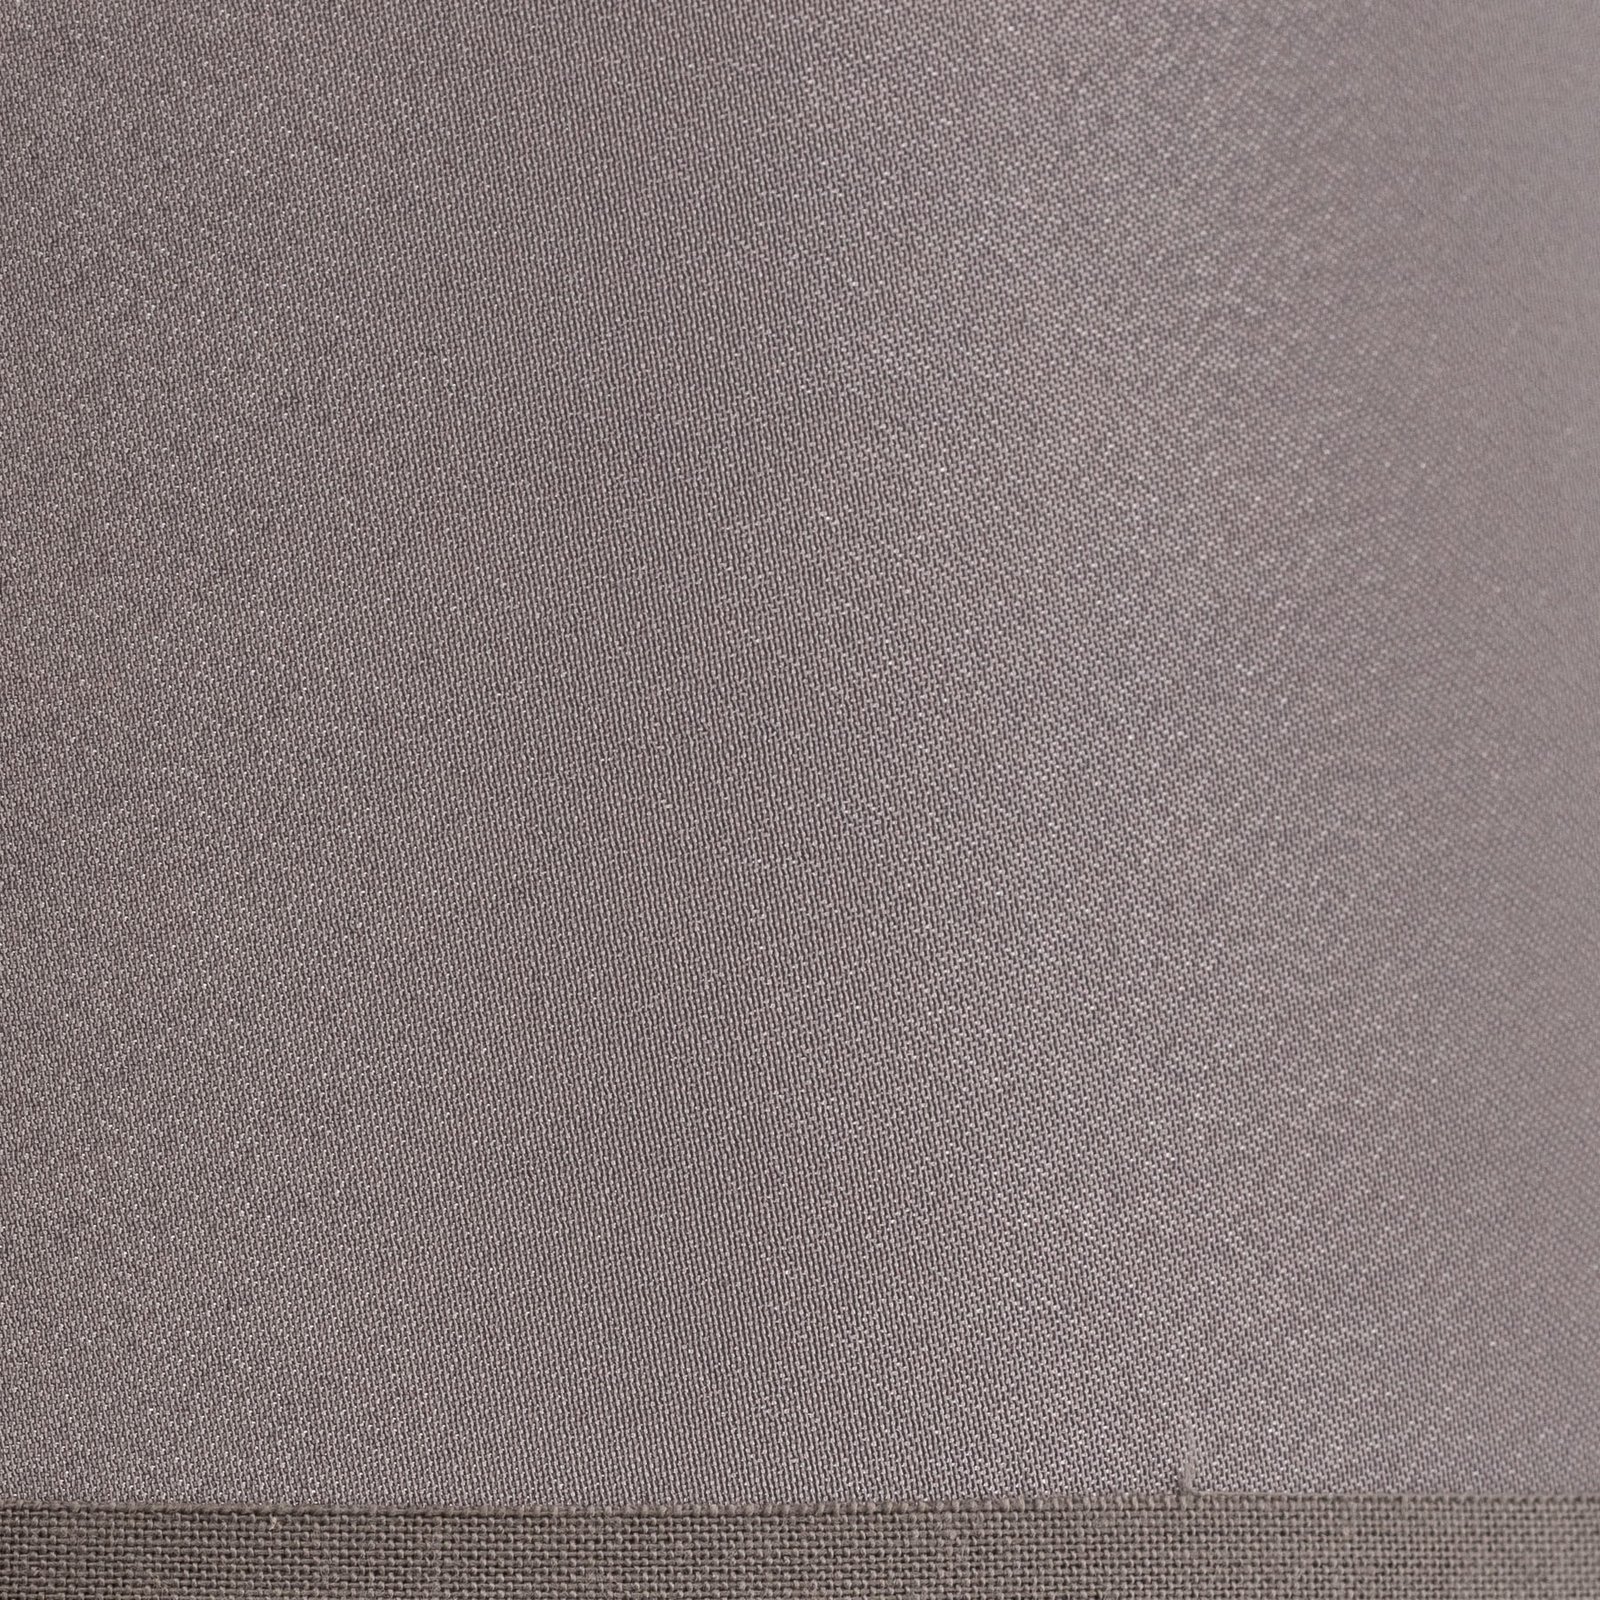 Cone lampeskærm, højde 18 cm, grå/hvid chintz